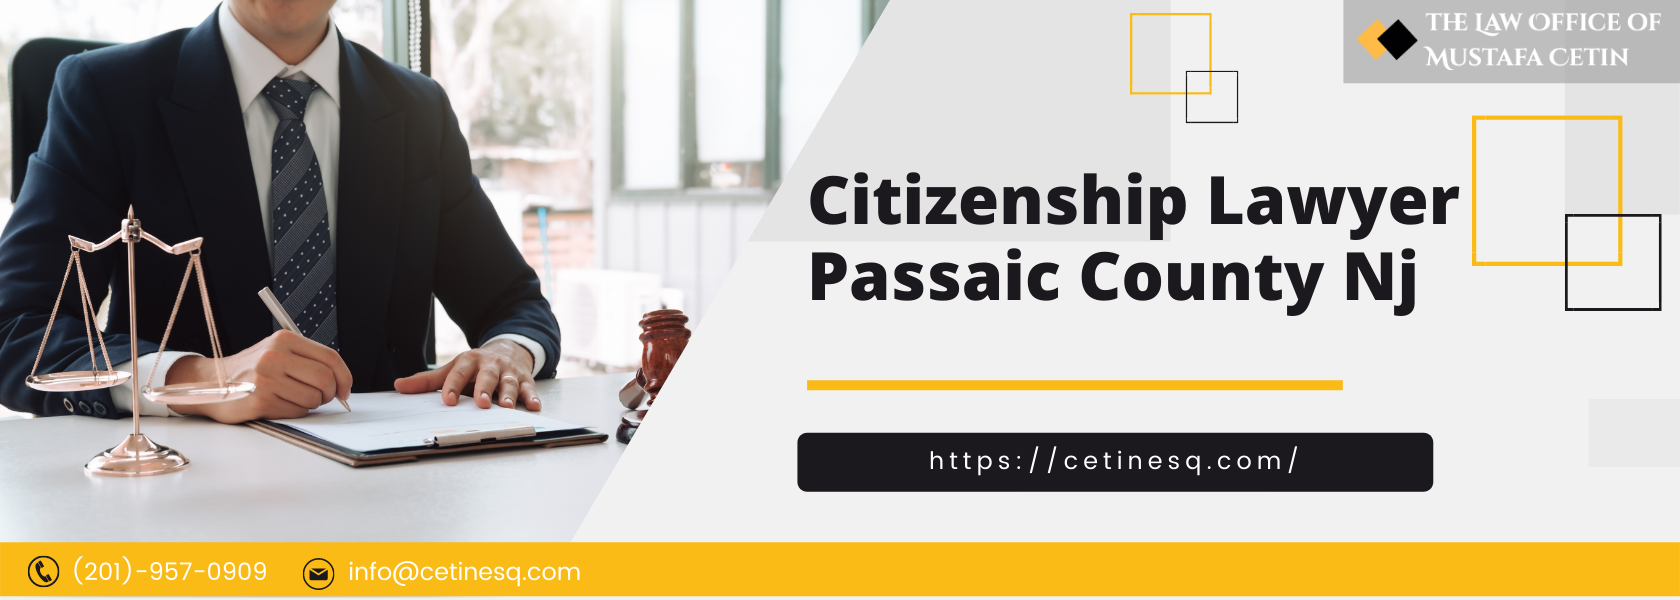 Citizenship Lawyer Passaic County Nj - Citizenship Lawyer